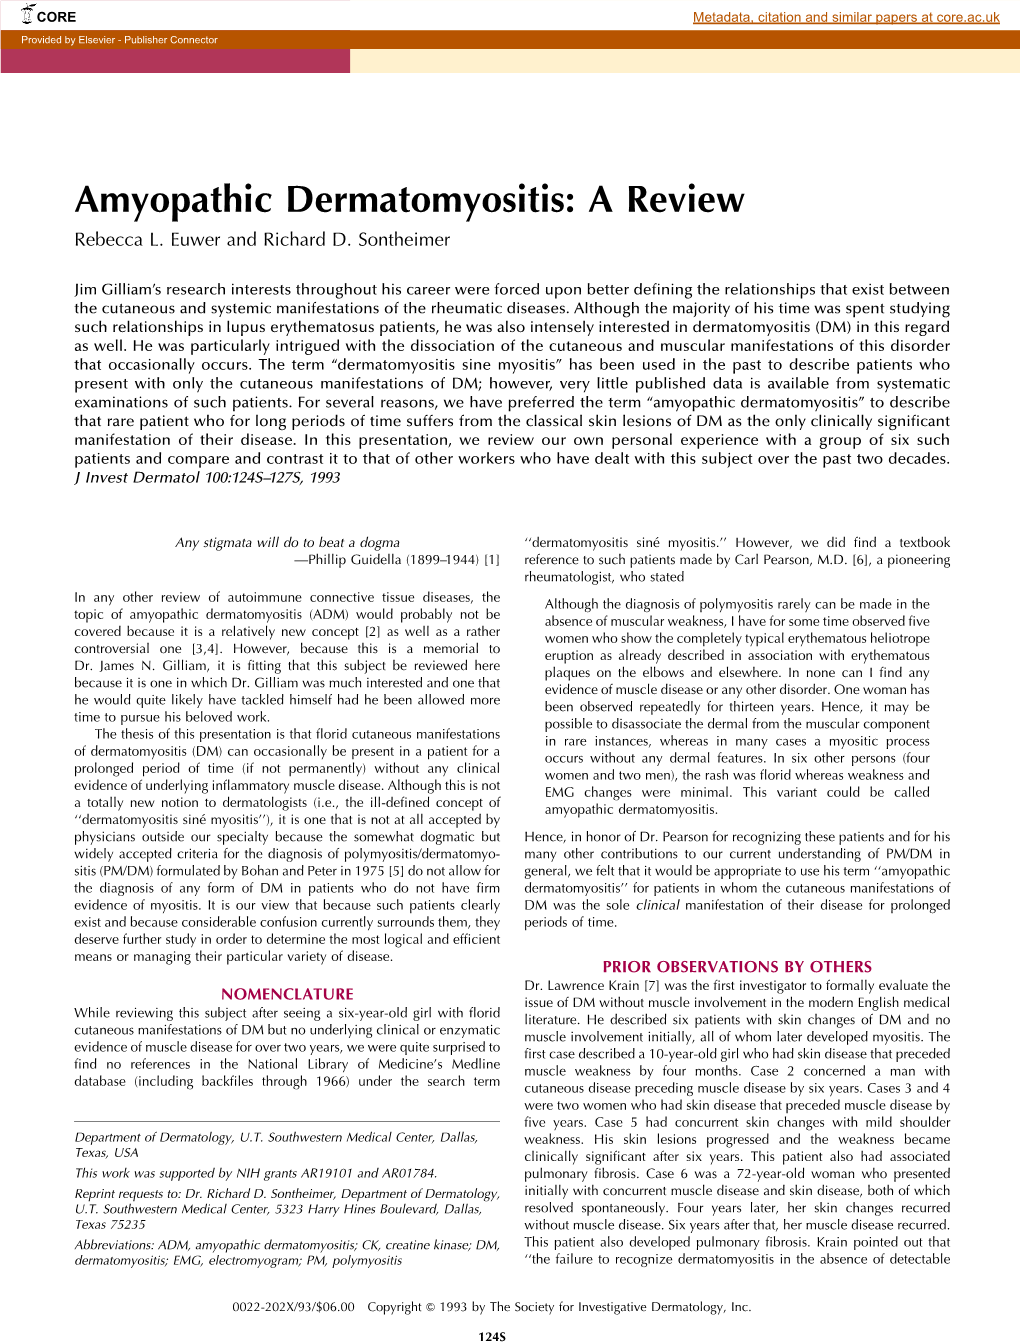 Amyopathic Dermatomyositis: a Review Rebecca L